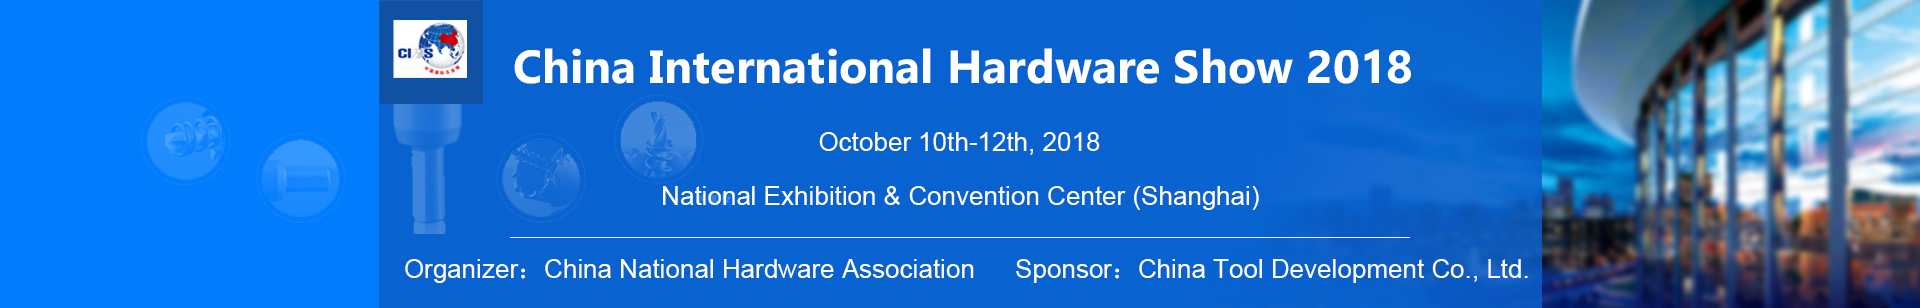 China International Hardware Show 2018